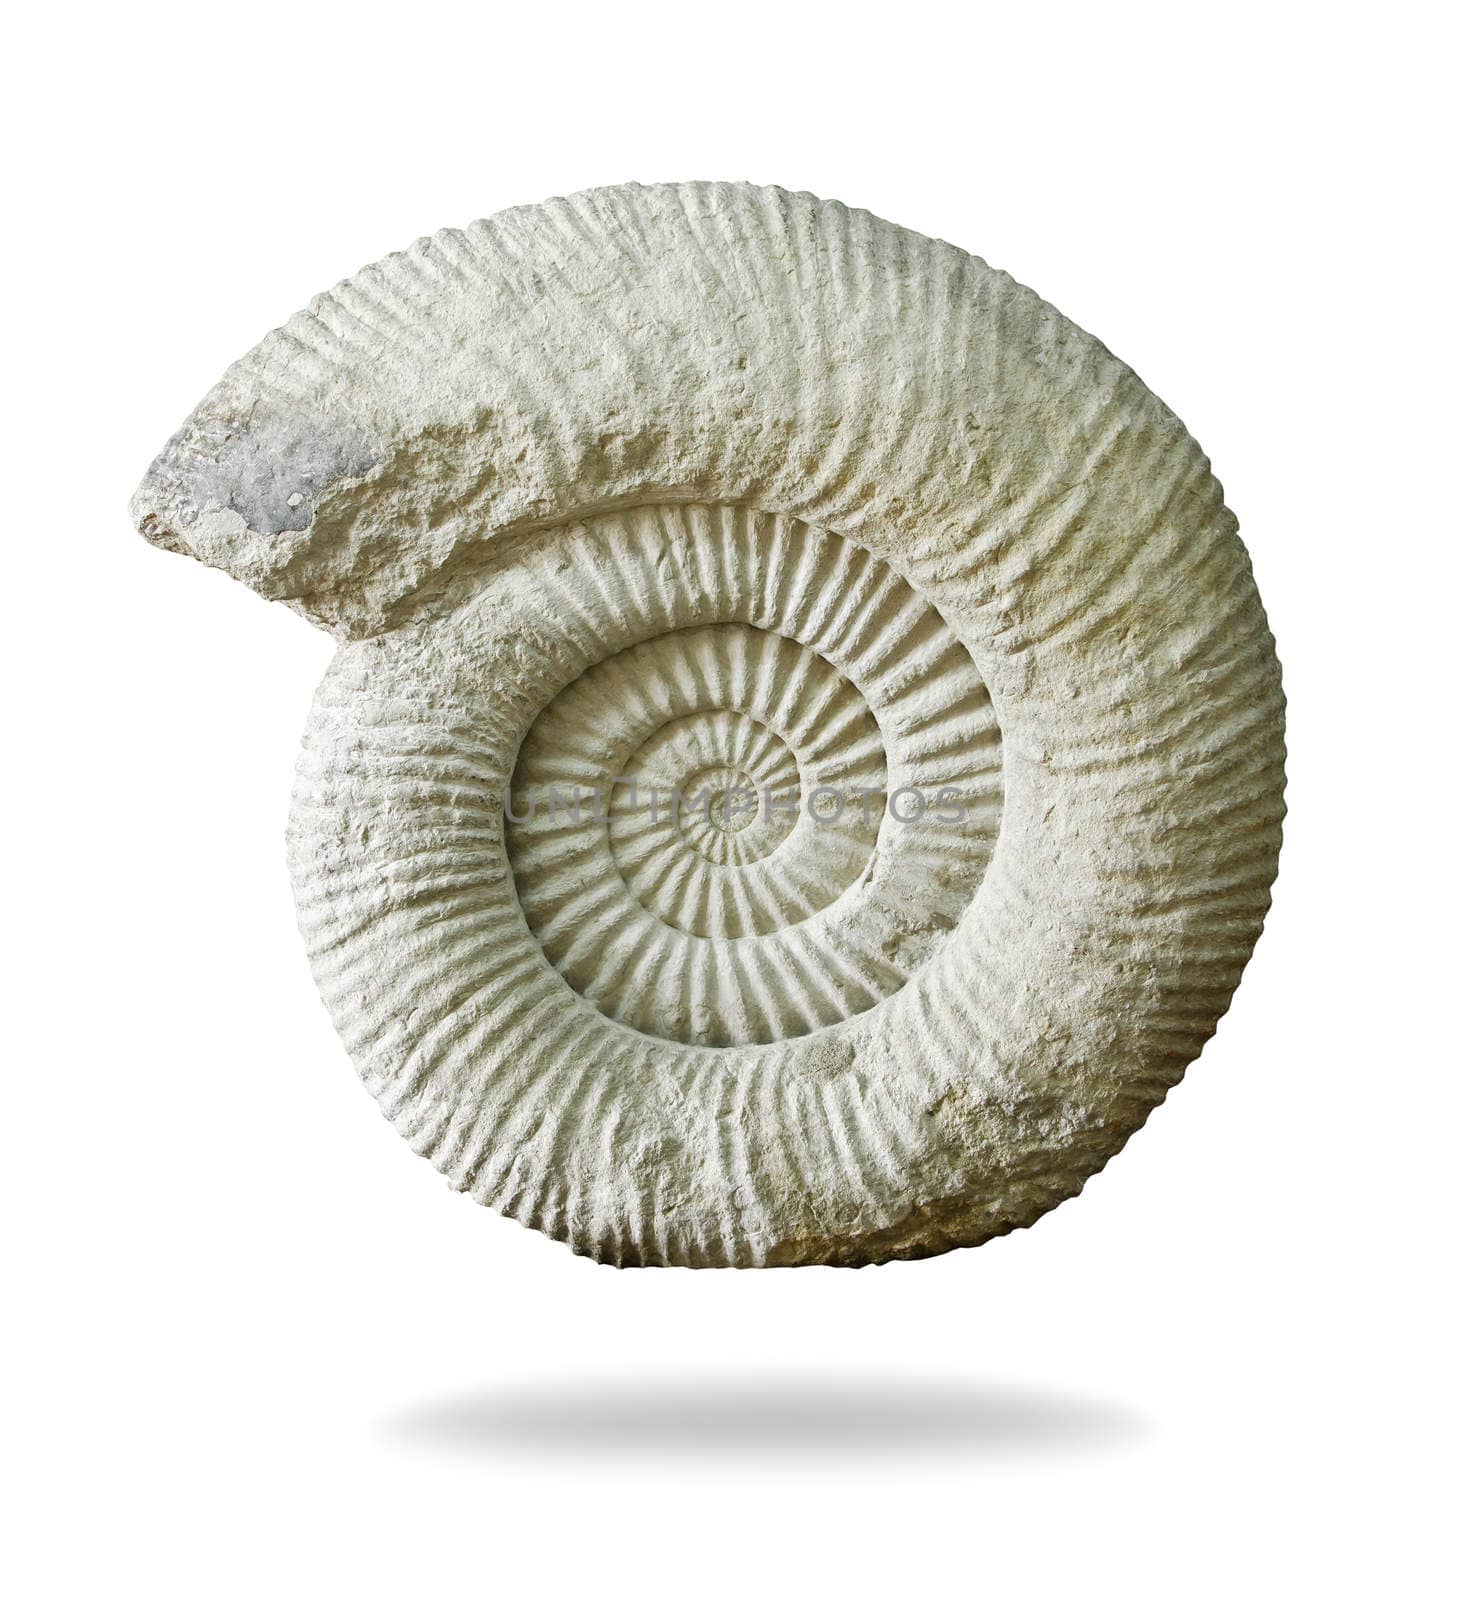 Ammonite prehistoric fossil on white background. by Gamjai